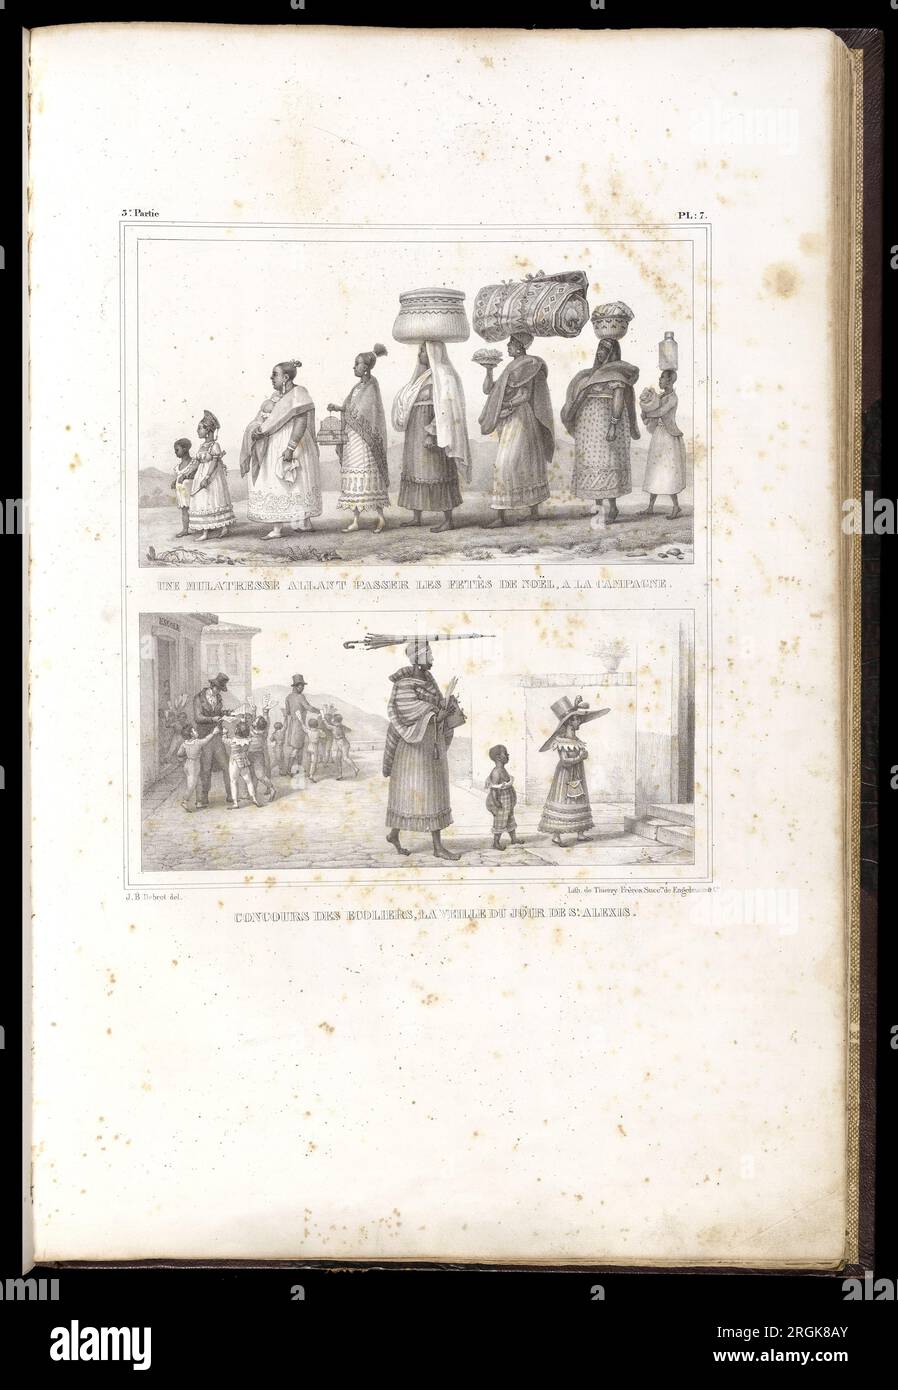 Une mulatresse allant passer les fetês de noel, a la campagna 1839 di Thierry Frères Foto Stock